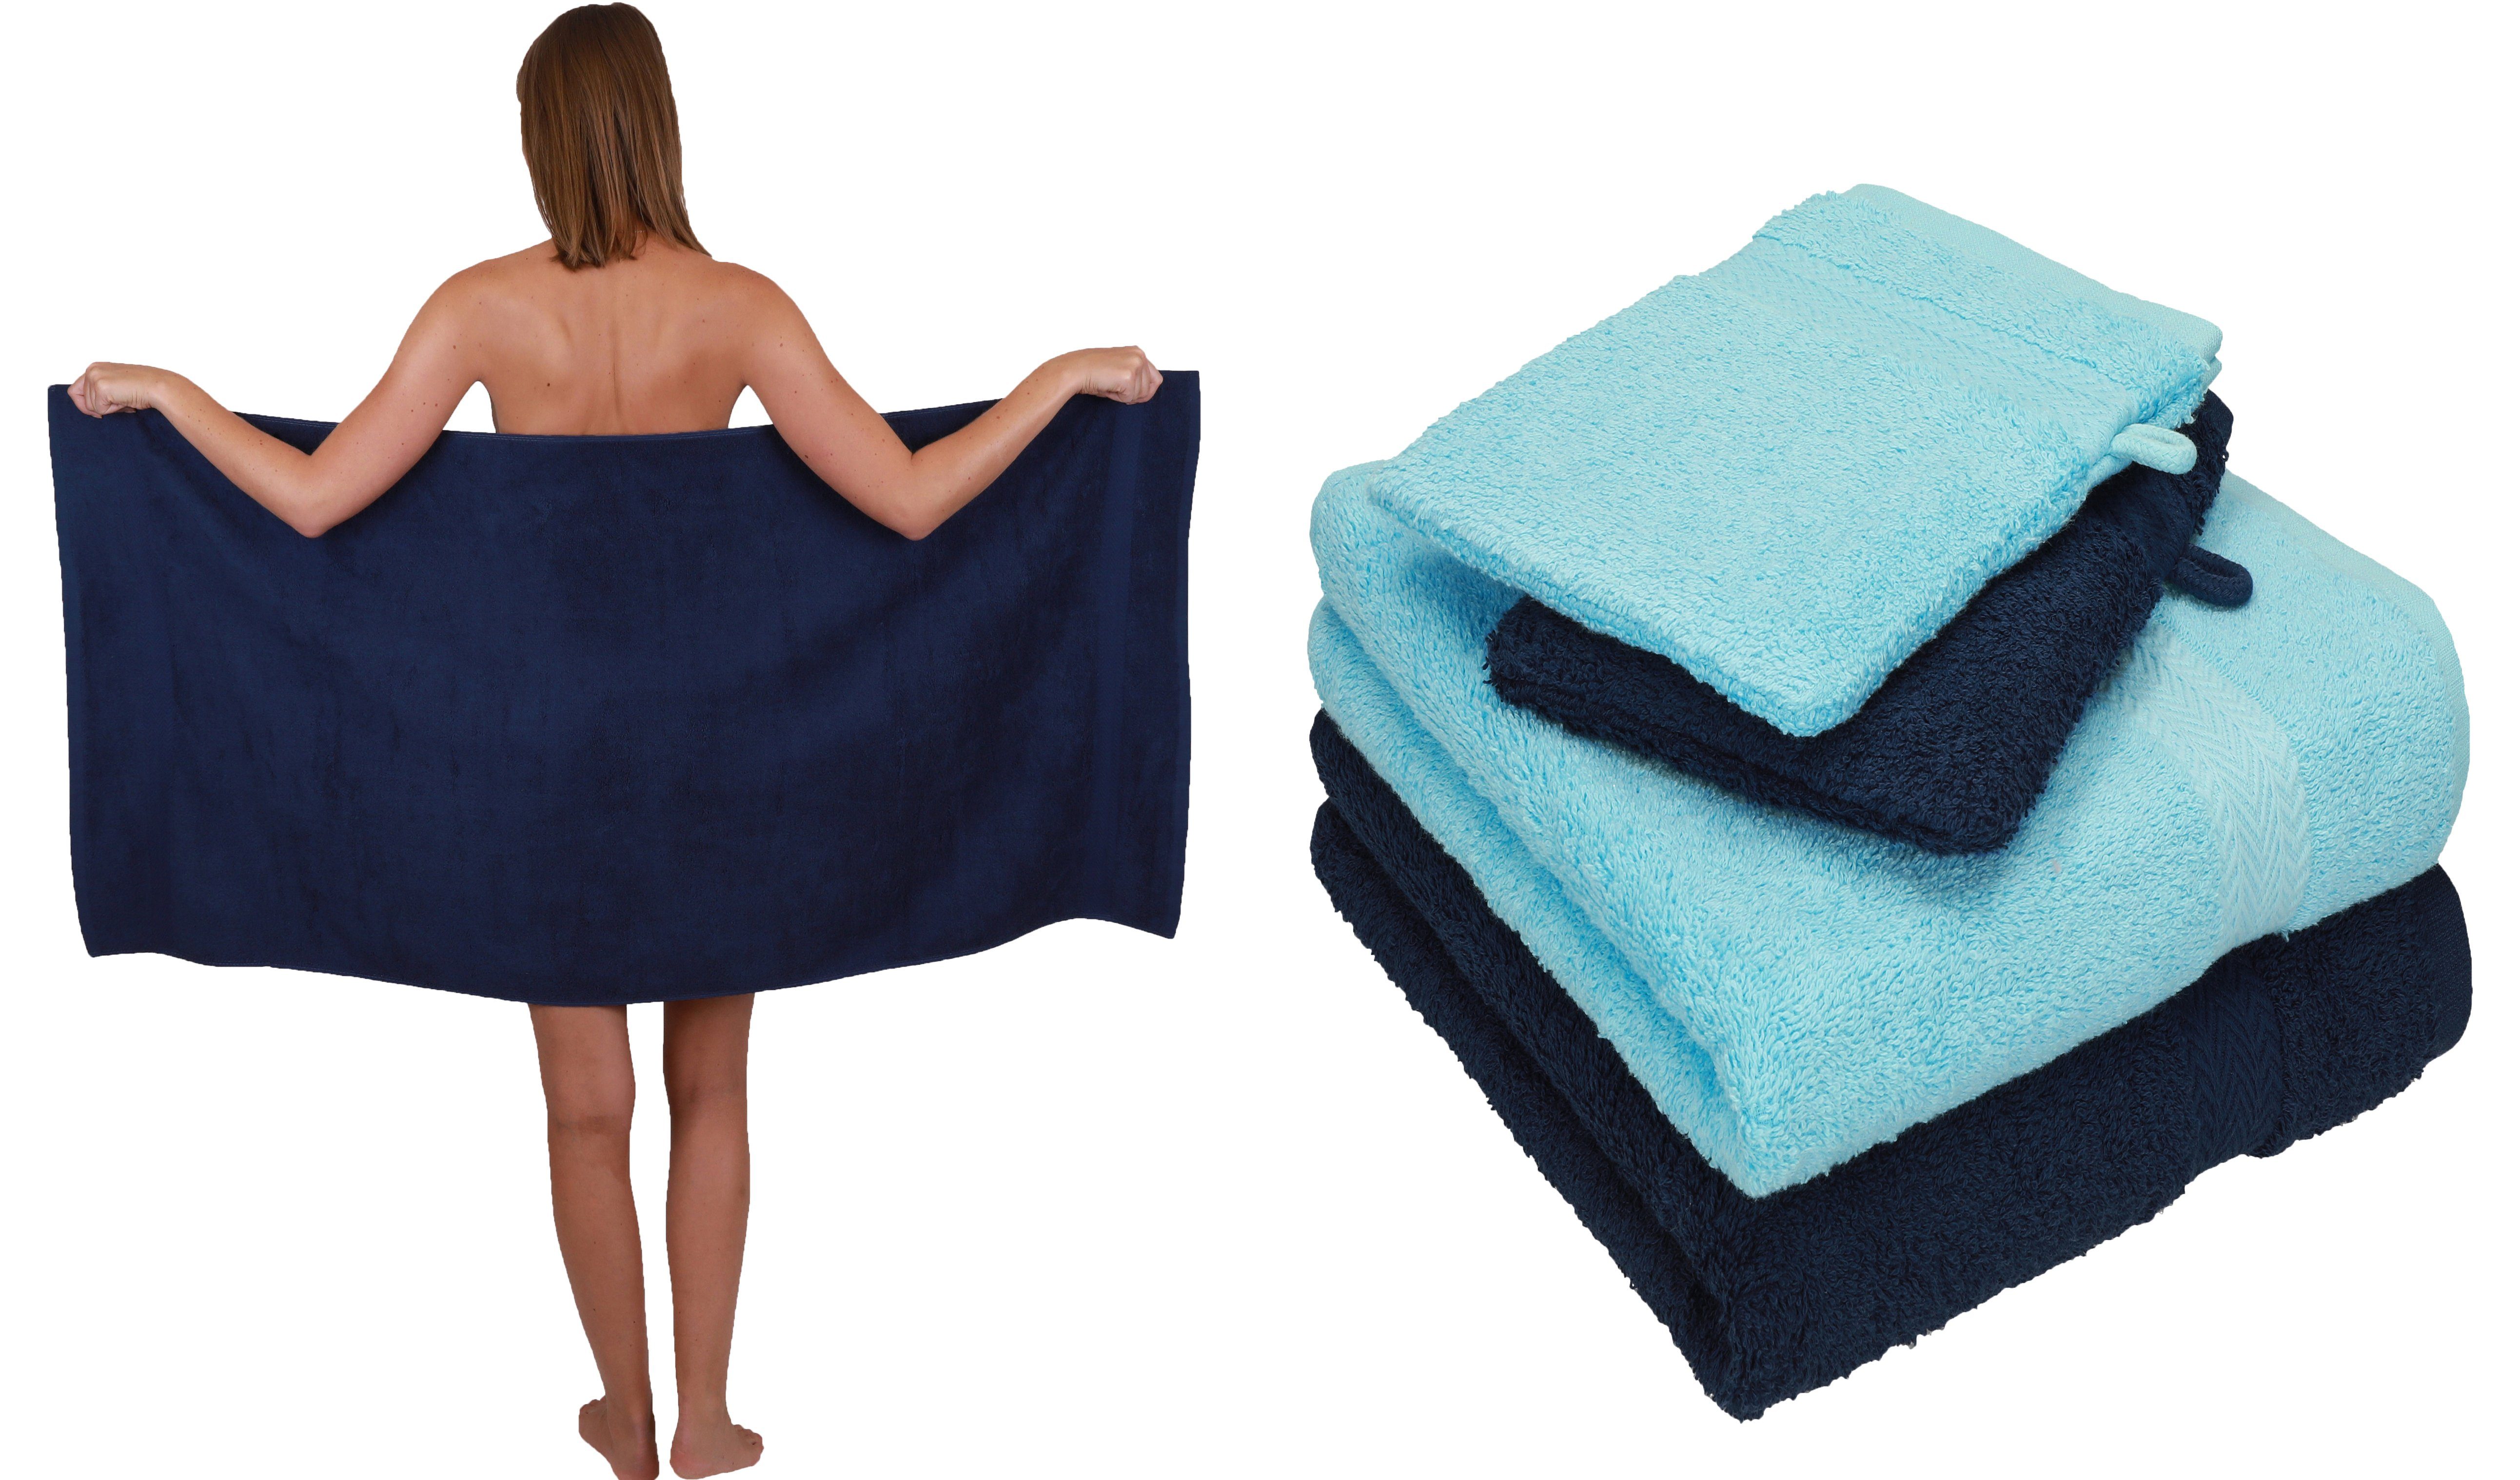 Betz Handtuch Set 5 TLG. Handtuch Set Single Pack 100% Baumwolle 1 Duschtuch 2 Handtücher 2 Waschhandschuhe, 100% Baumwolle dunkelblau-türkis